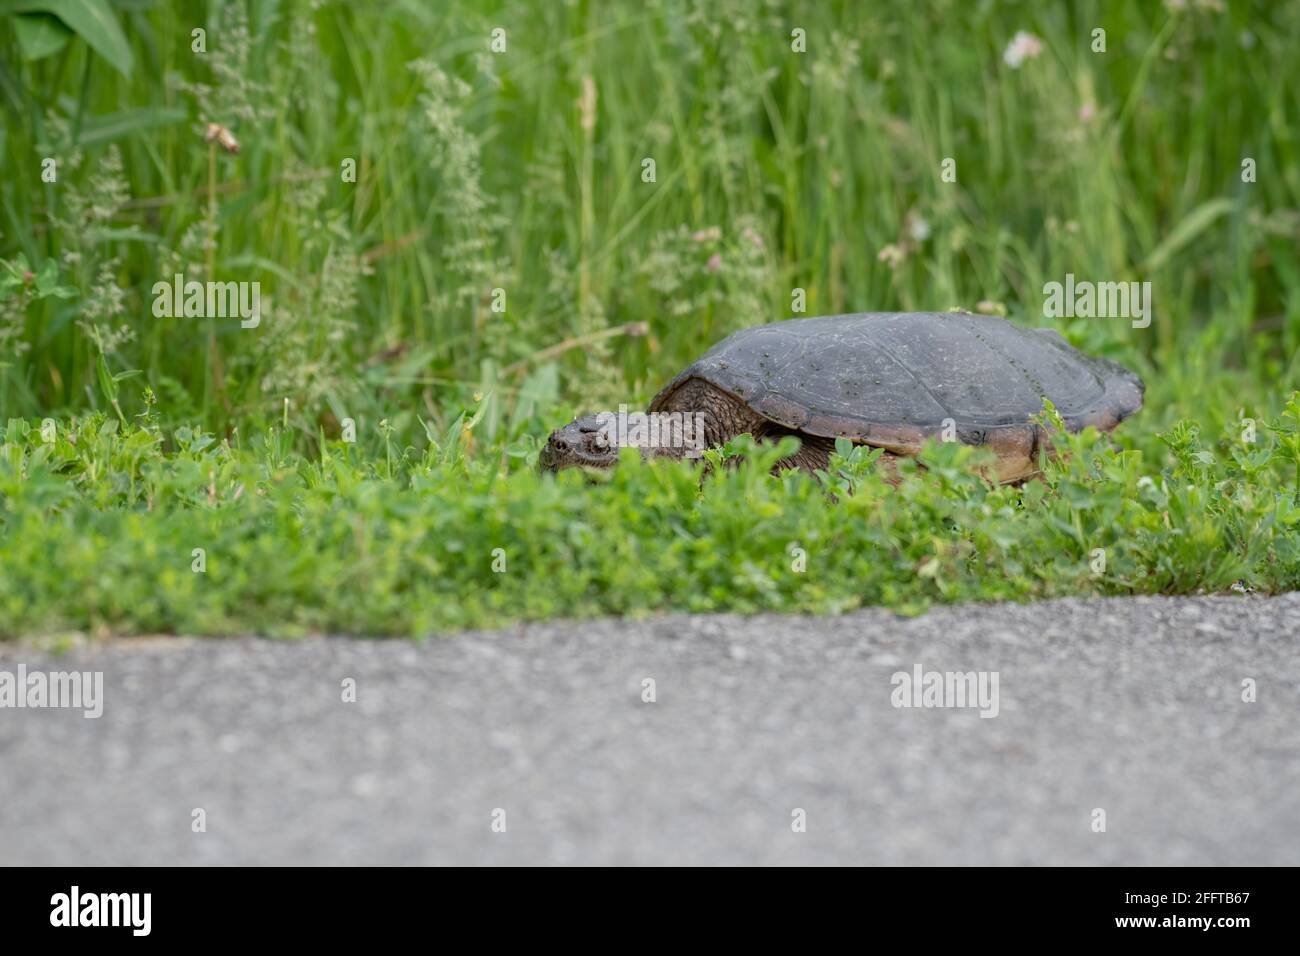 Snapping turtle walking through grass along a bike path Stock Photo